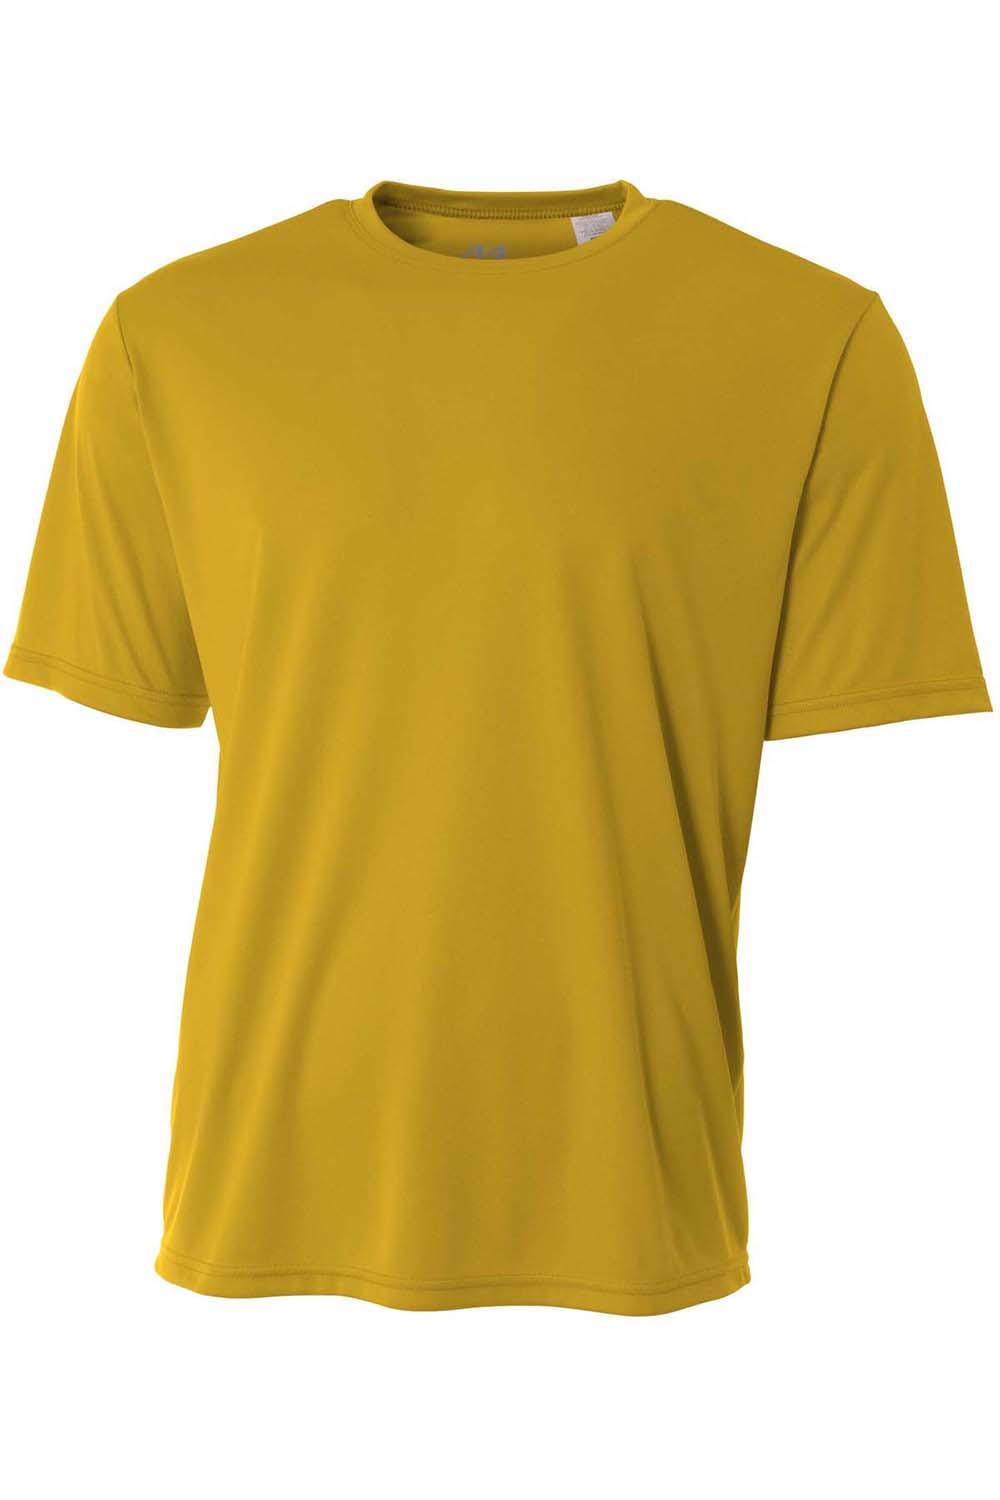 A4 N3142 Mens Performance Moisture Wicking Short Sleeve Crewneck T-Shirt Gold Flat Front